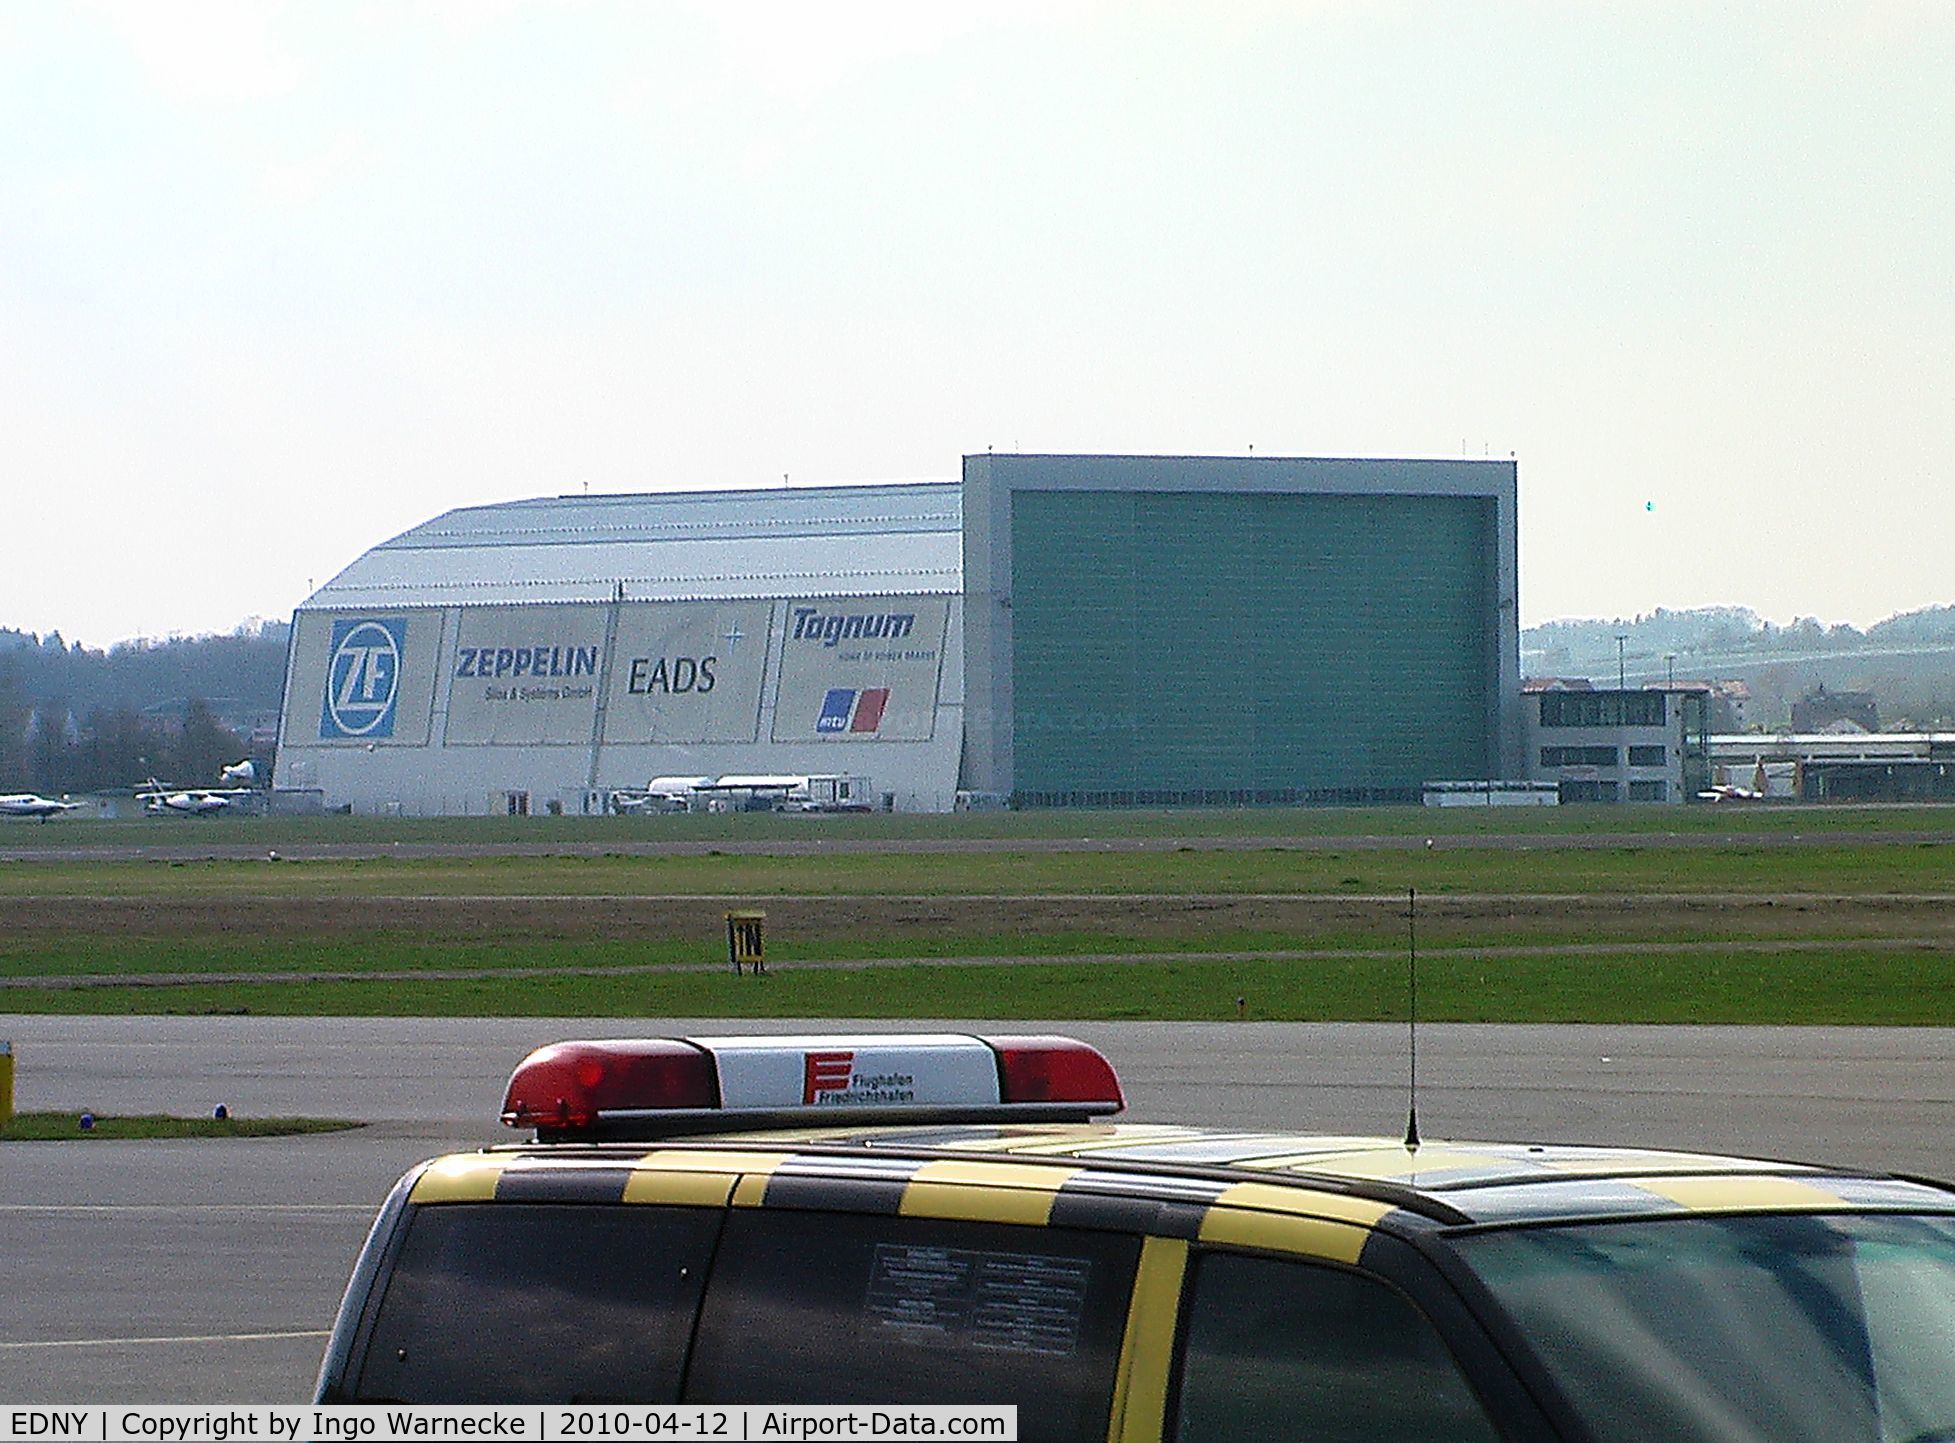 Bodensee Airport, Friedrichshafen Germany (EDNY) - the new Zeppelin hangar